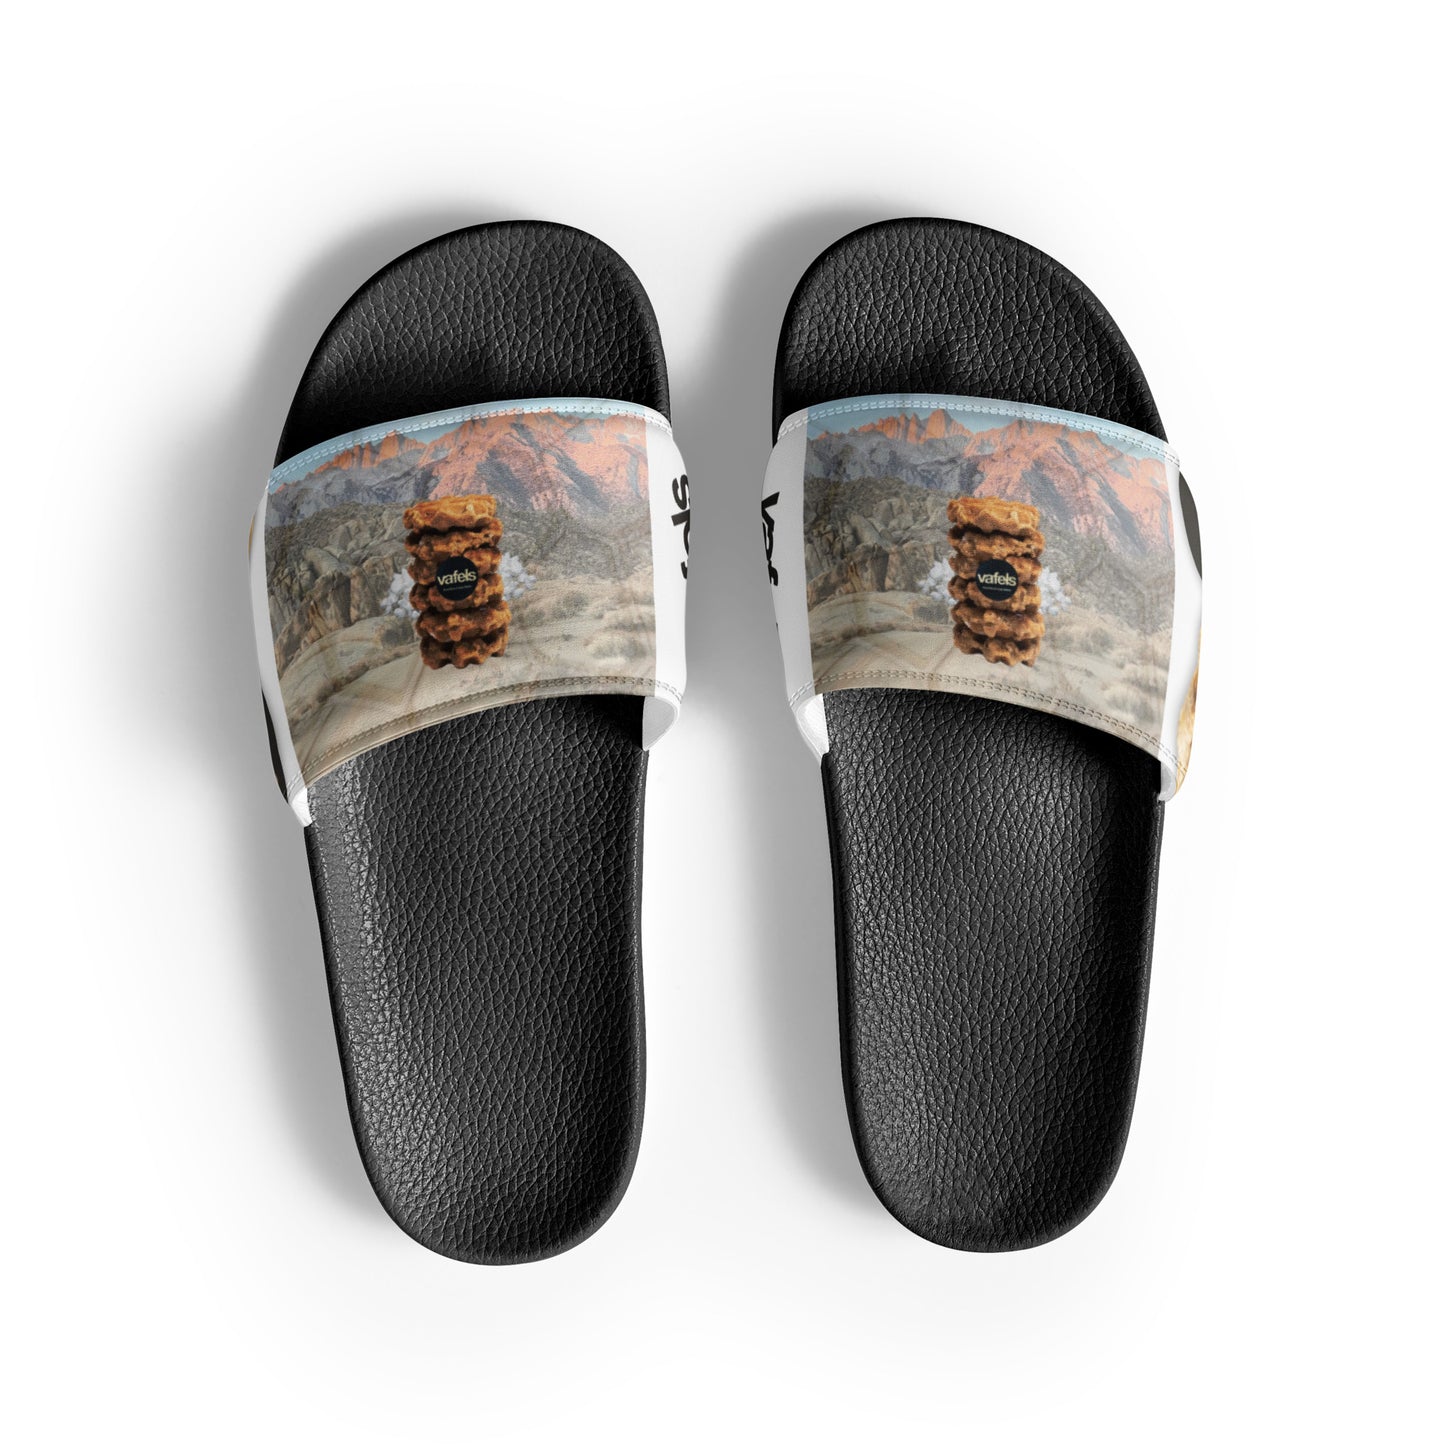 Vafel sandals (men's sizes)